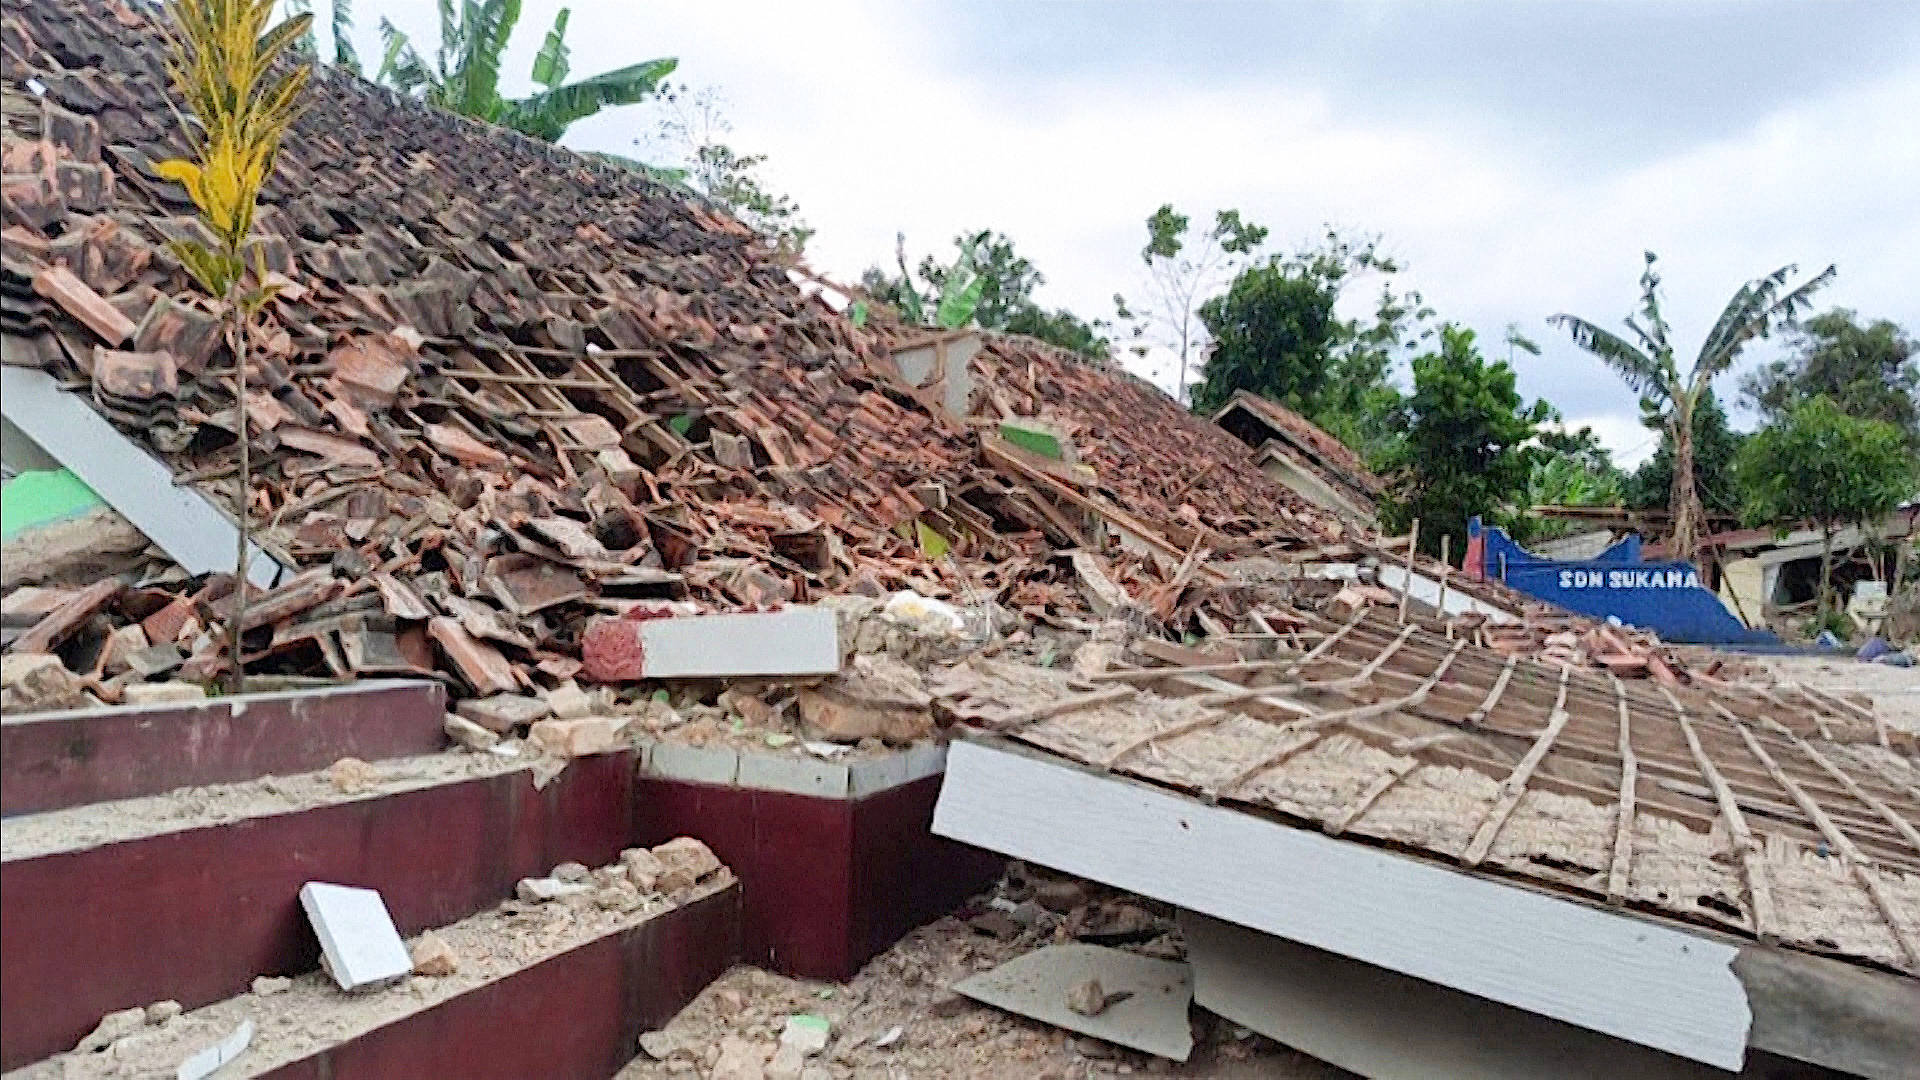 Earthquake Kills at Least 56 People in Indonesia